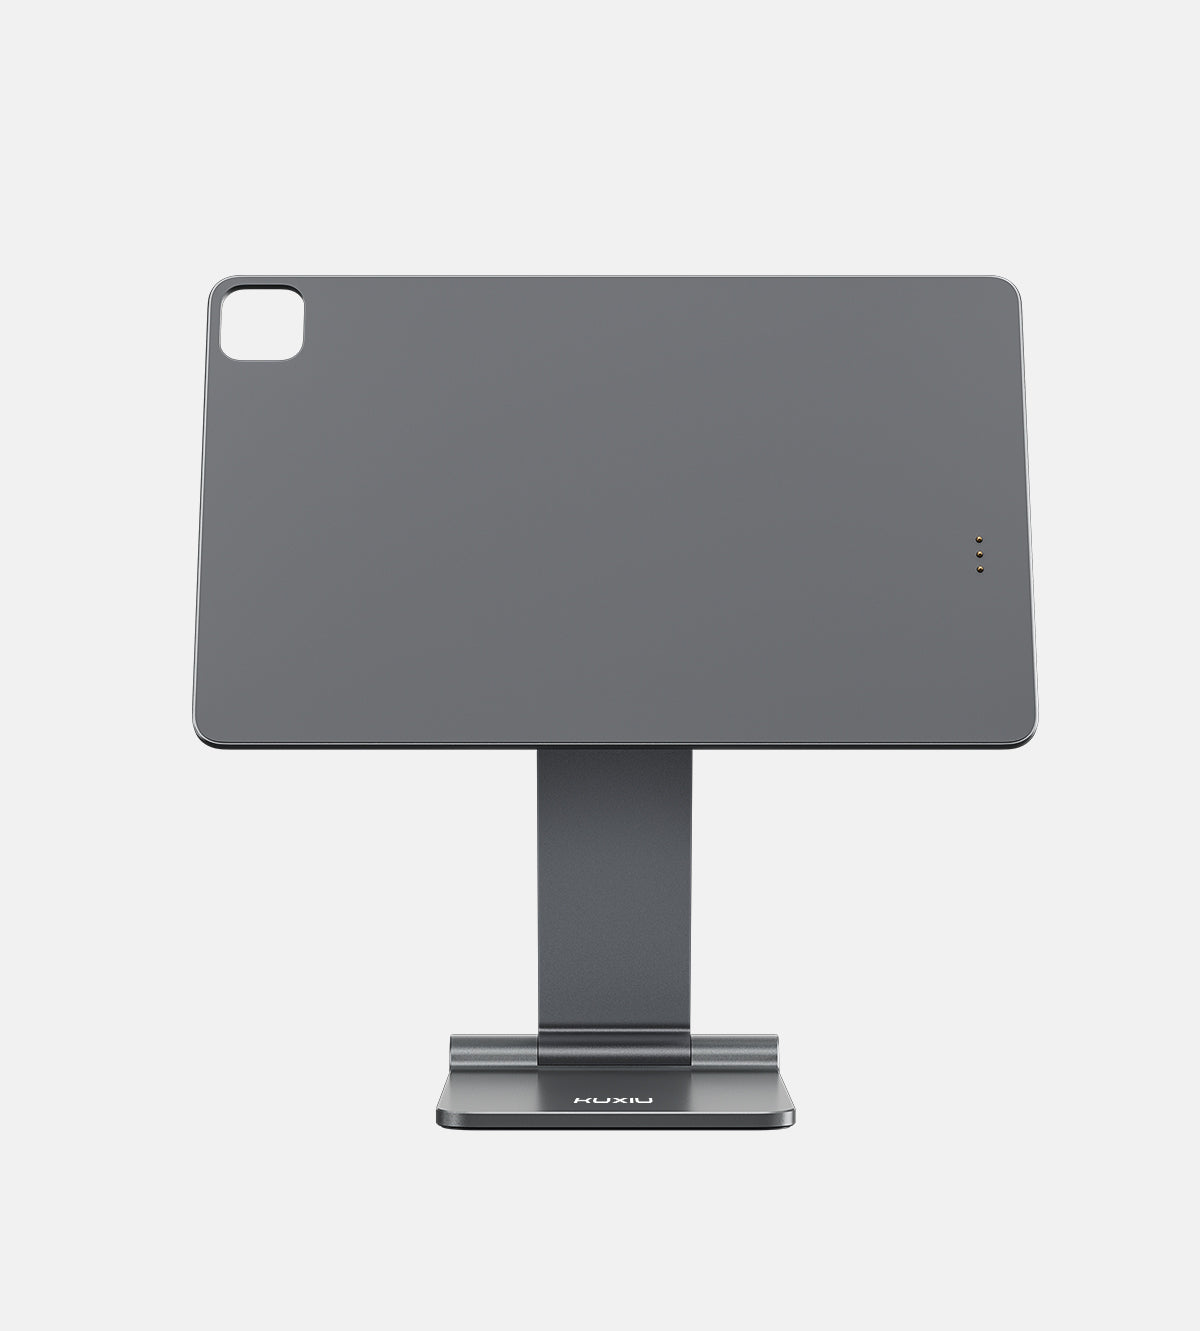 KUXIU X33 Pro MAX iPad Magnetic Charging Stand